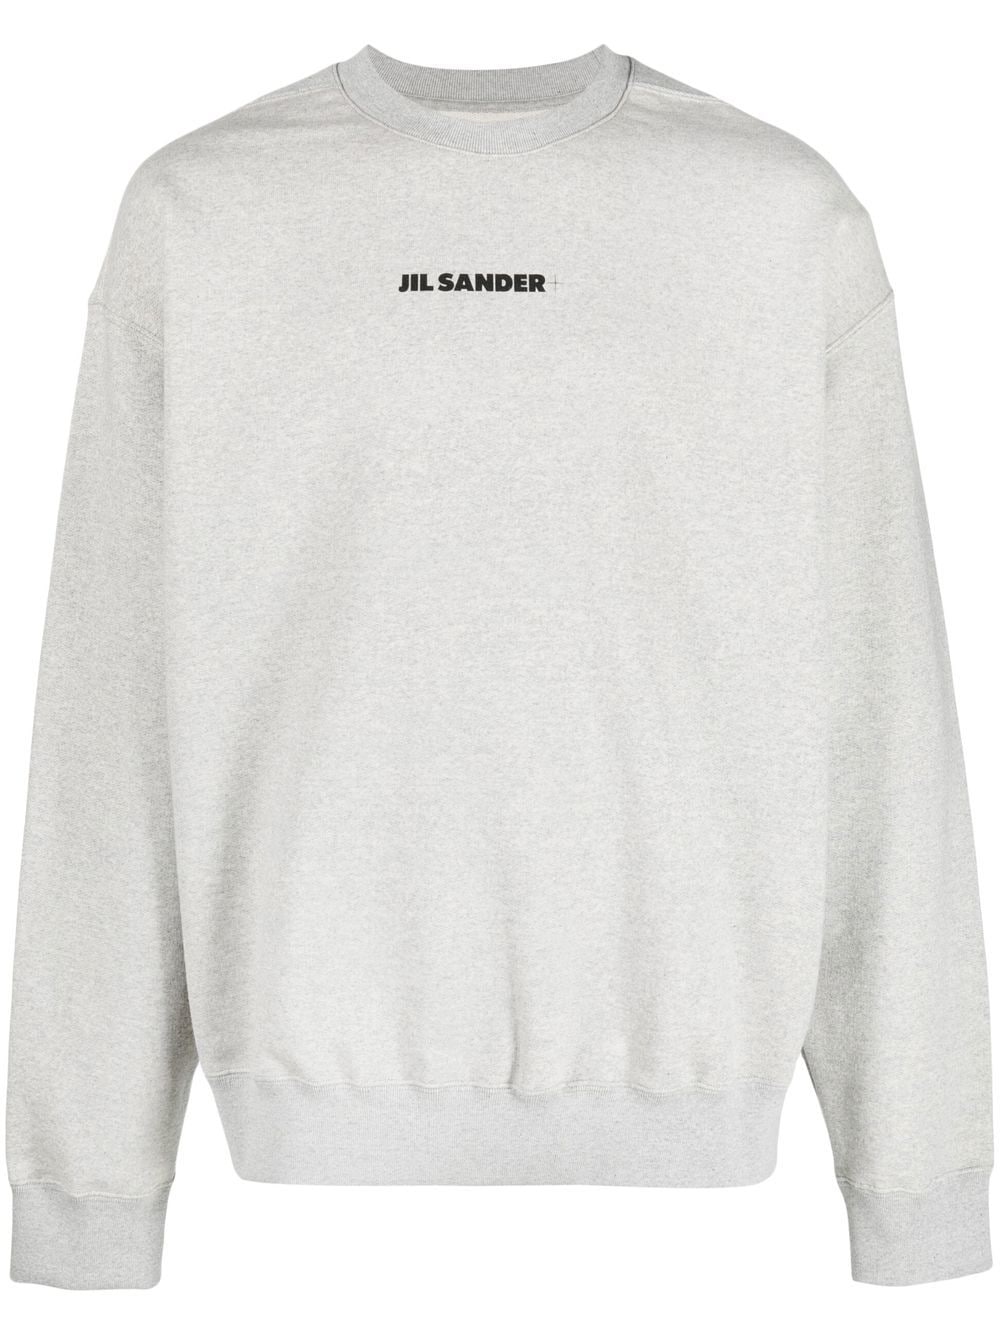 Jil Sander Sweatshirt mit Logo-Print - Grau von Jil Sander